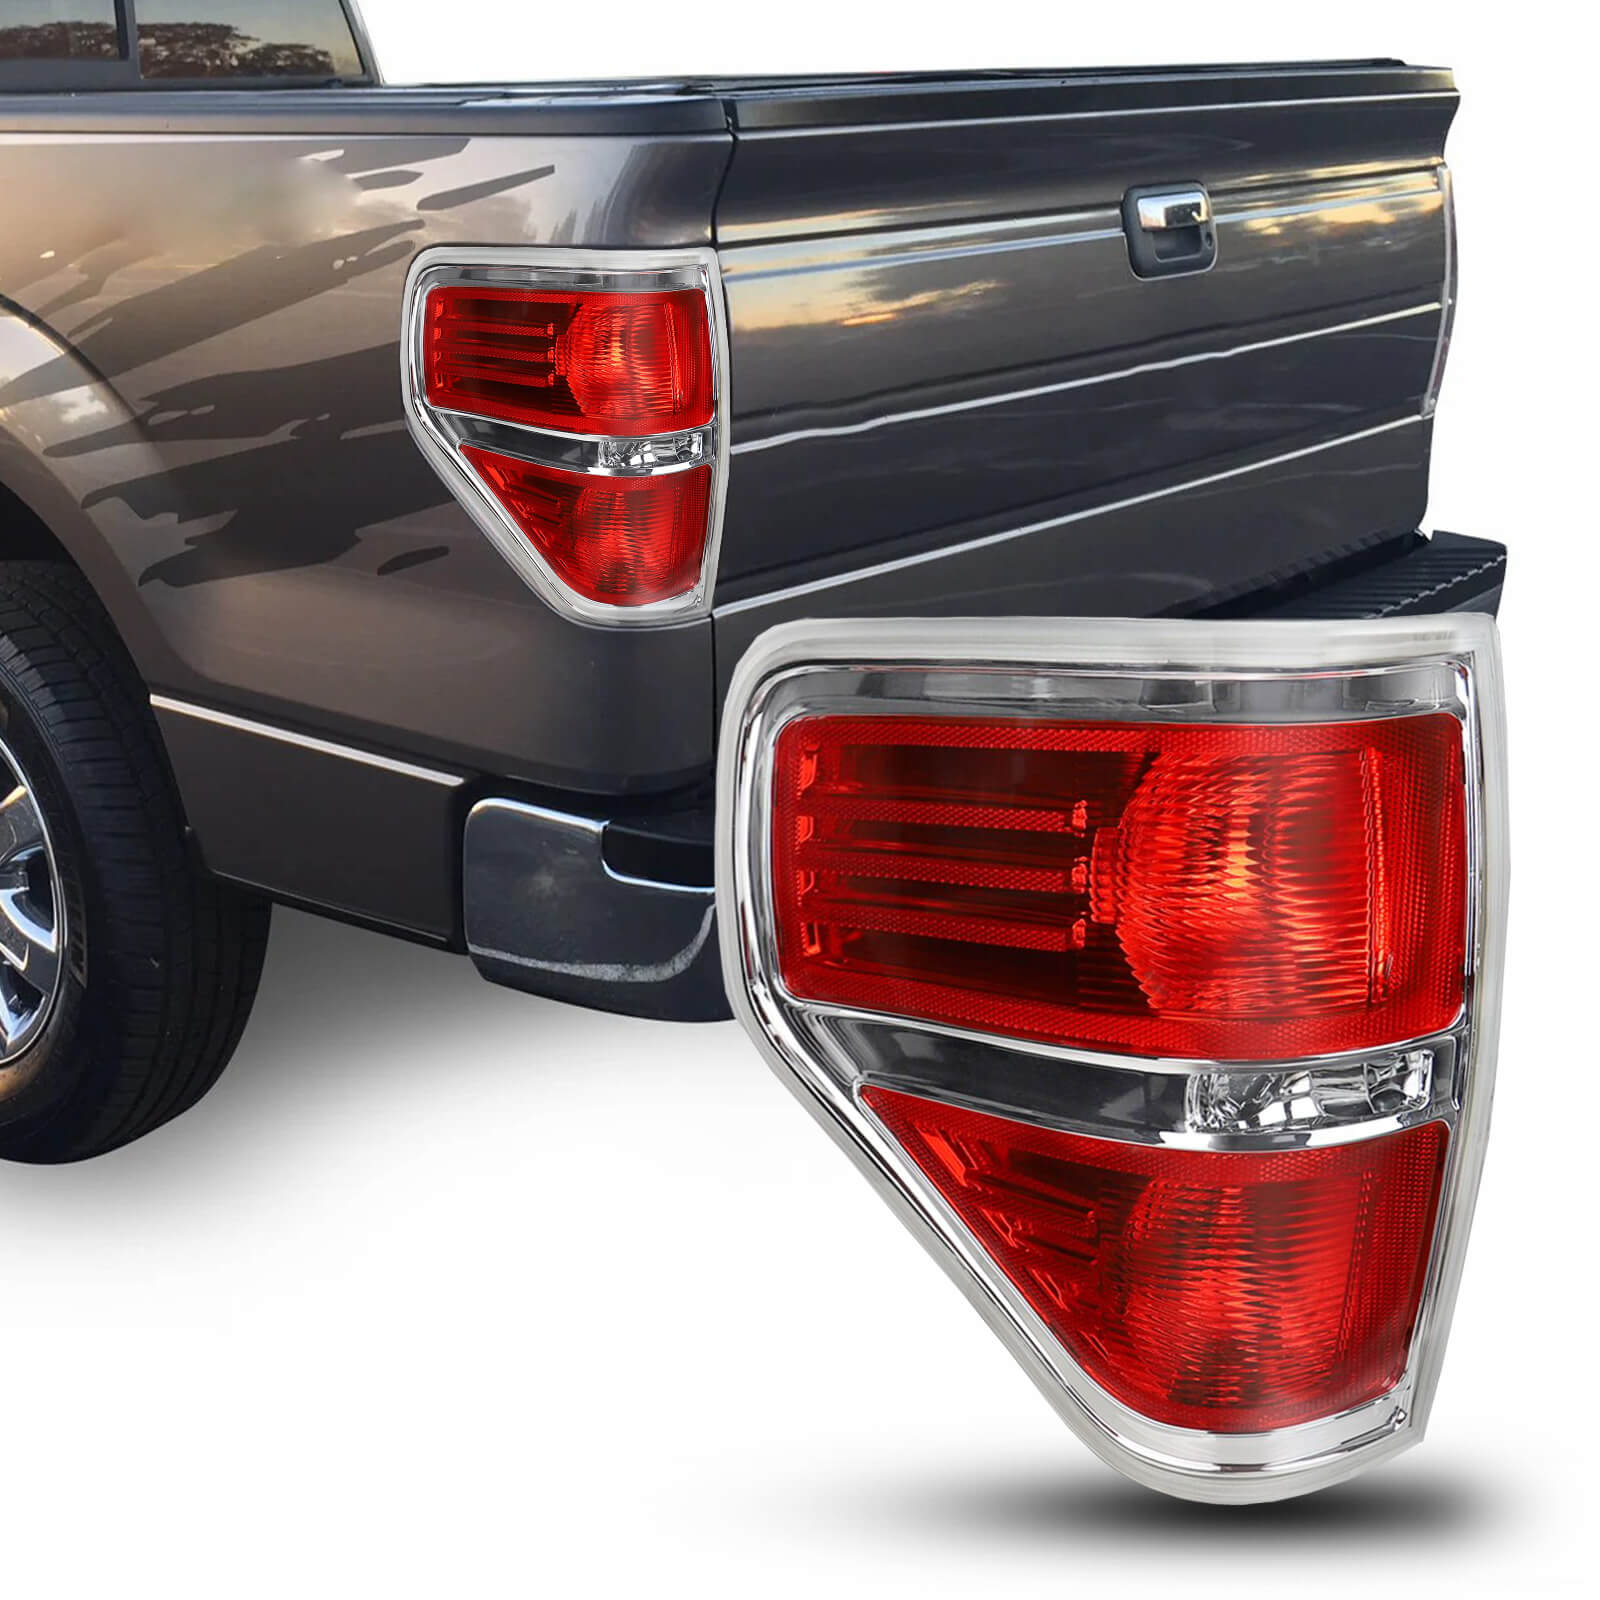 Autoone Lighting Assemblies Tail Light Assemblies*1 (Left) Halogen Tail Light Assembly For 2009-2014 Ford F-150 Chrome Trim